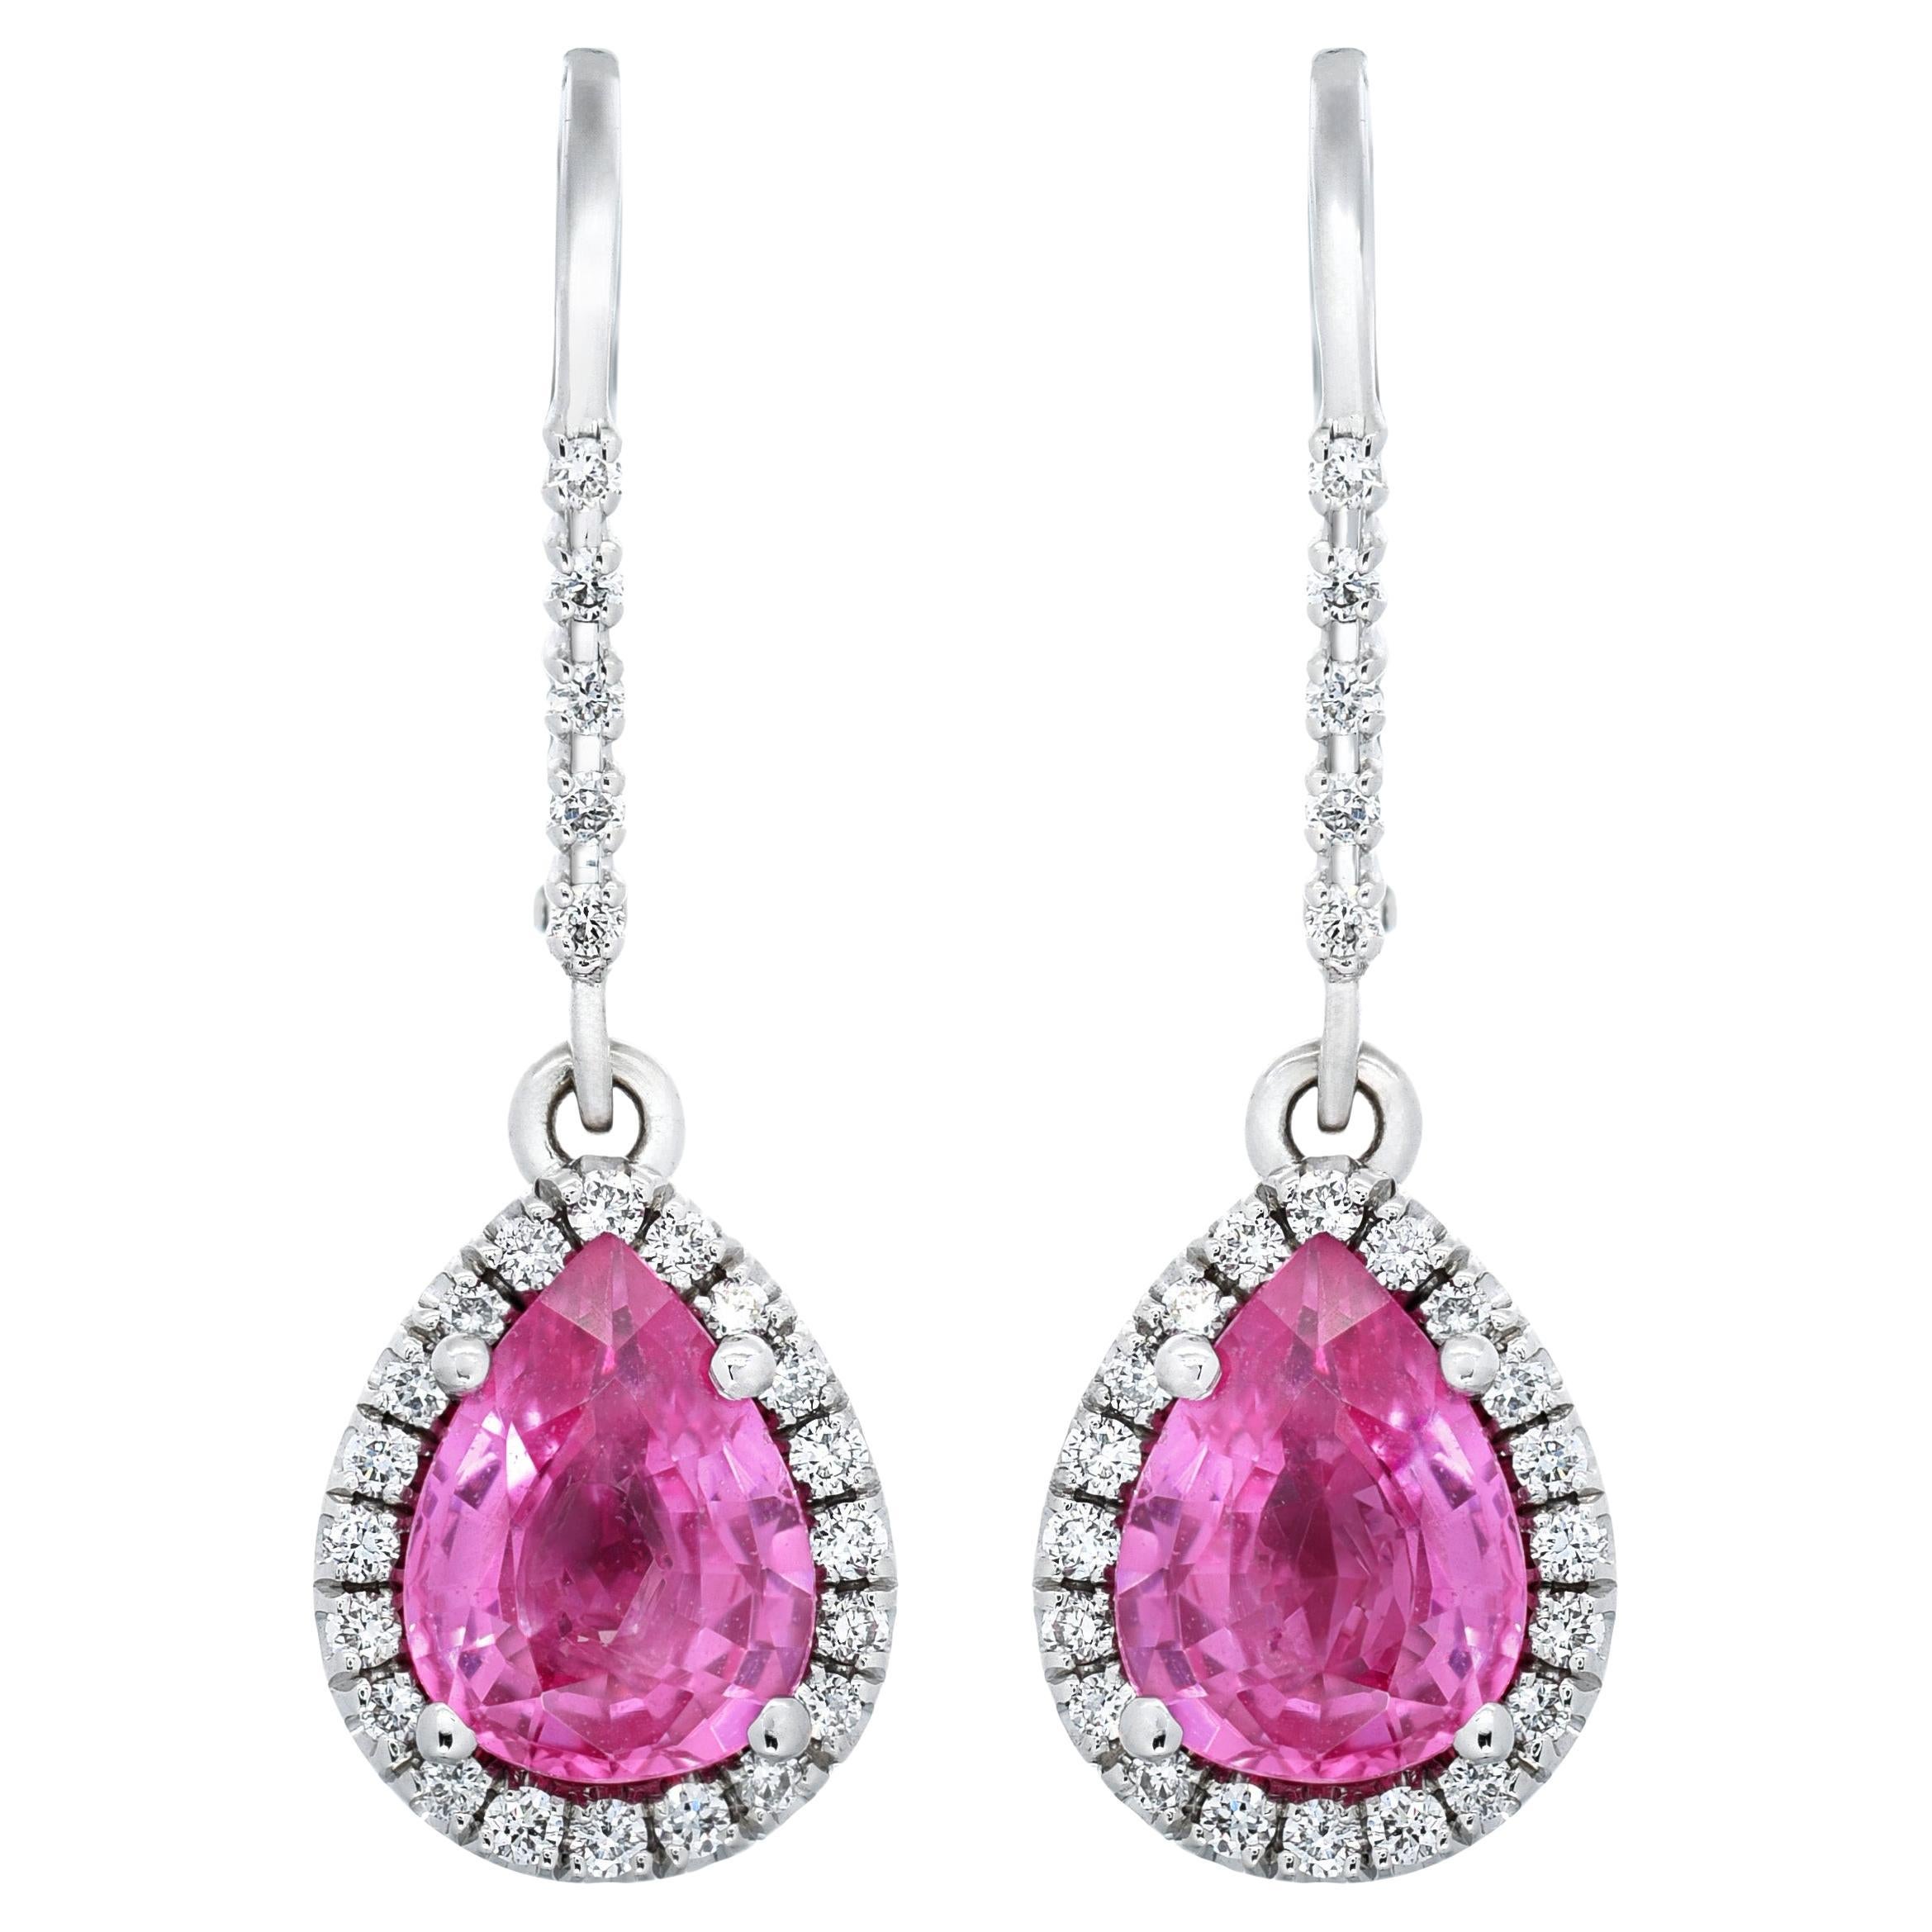 GIA Certified Natural 2.72 Carats Pink Sapphire Earring Diamonds set